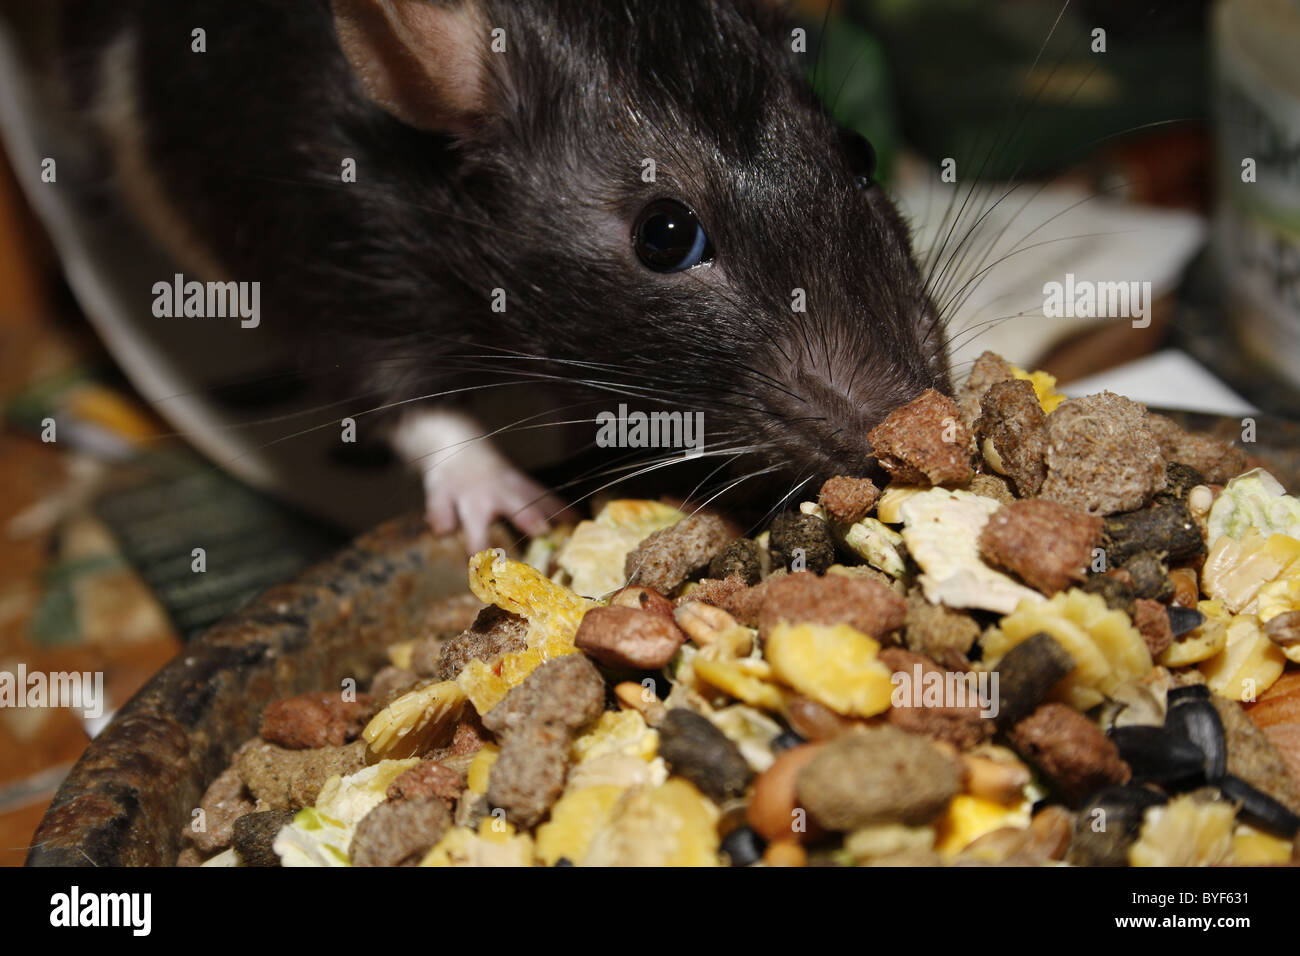 rat eating food Stock Photo - Alamy